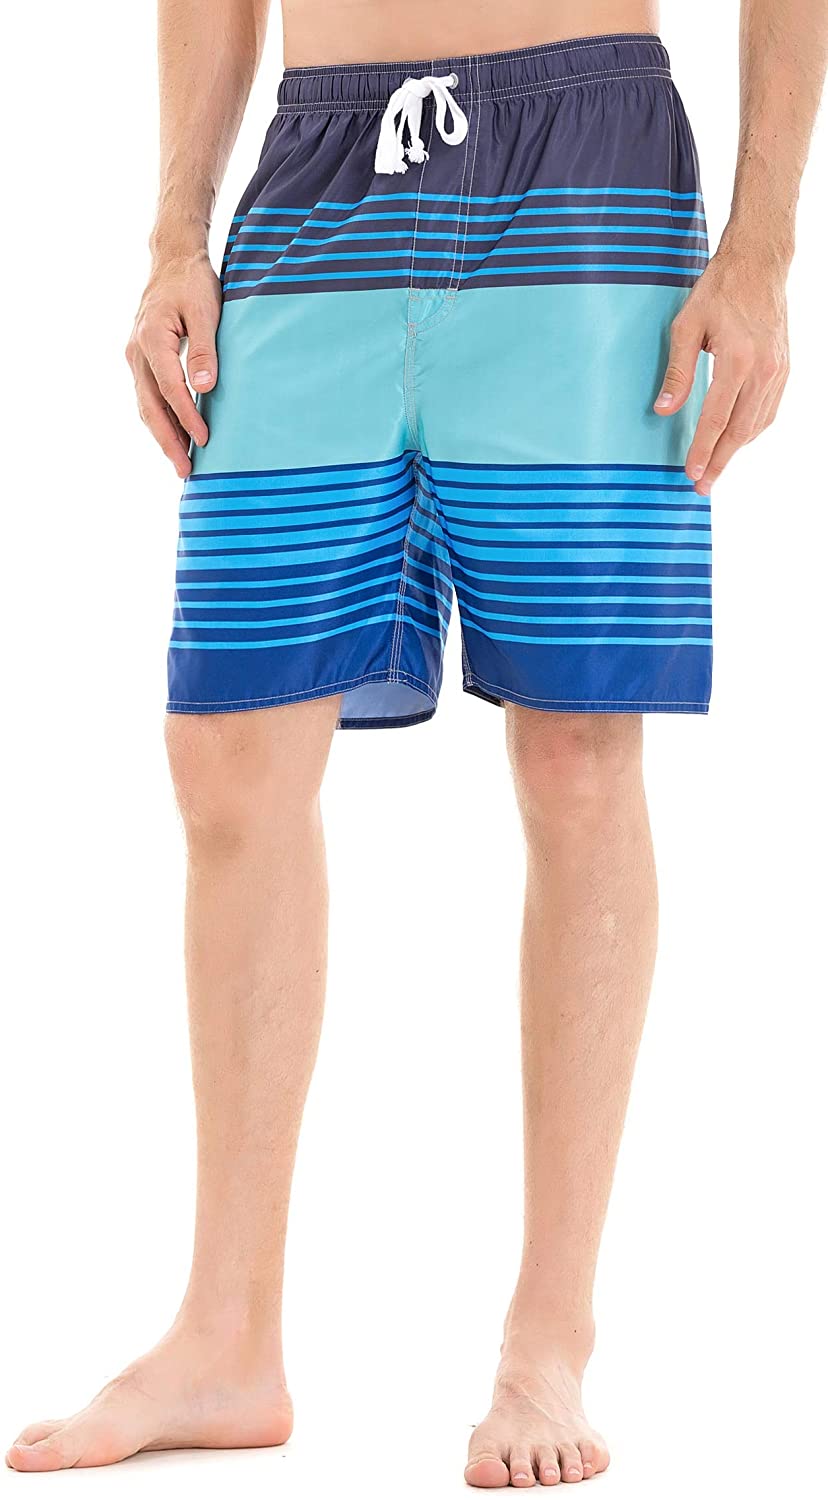 Clothin Mens Boardshort Swim Trunks Beach Quick Dry Swimming Shorts